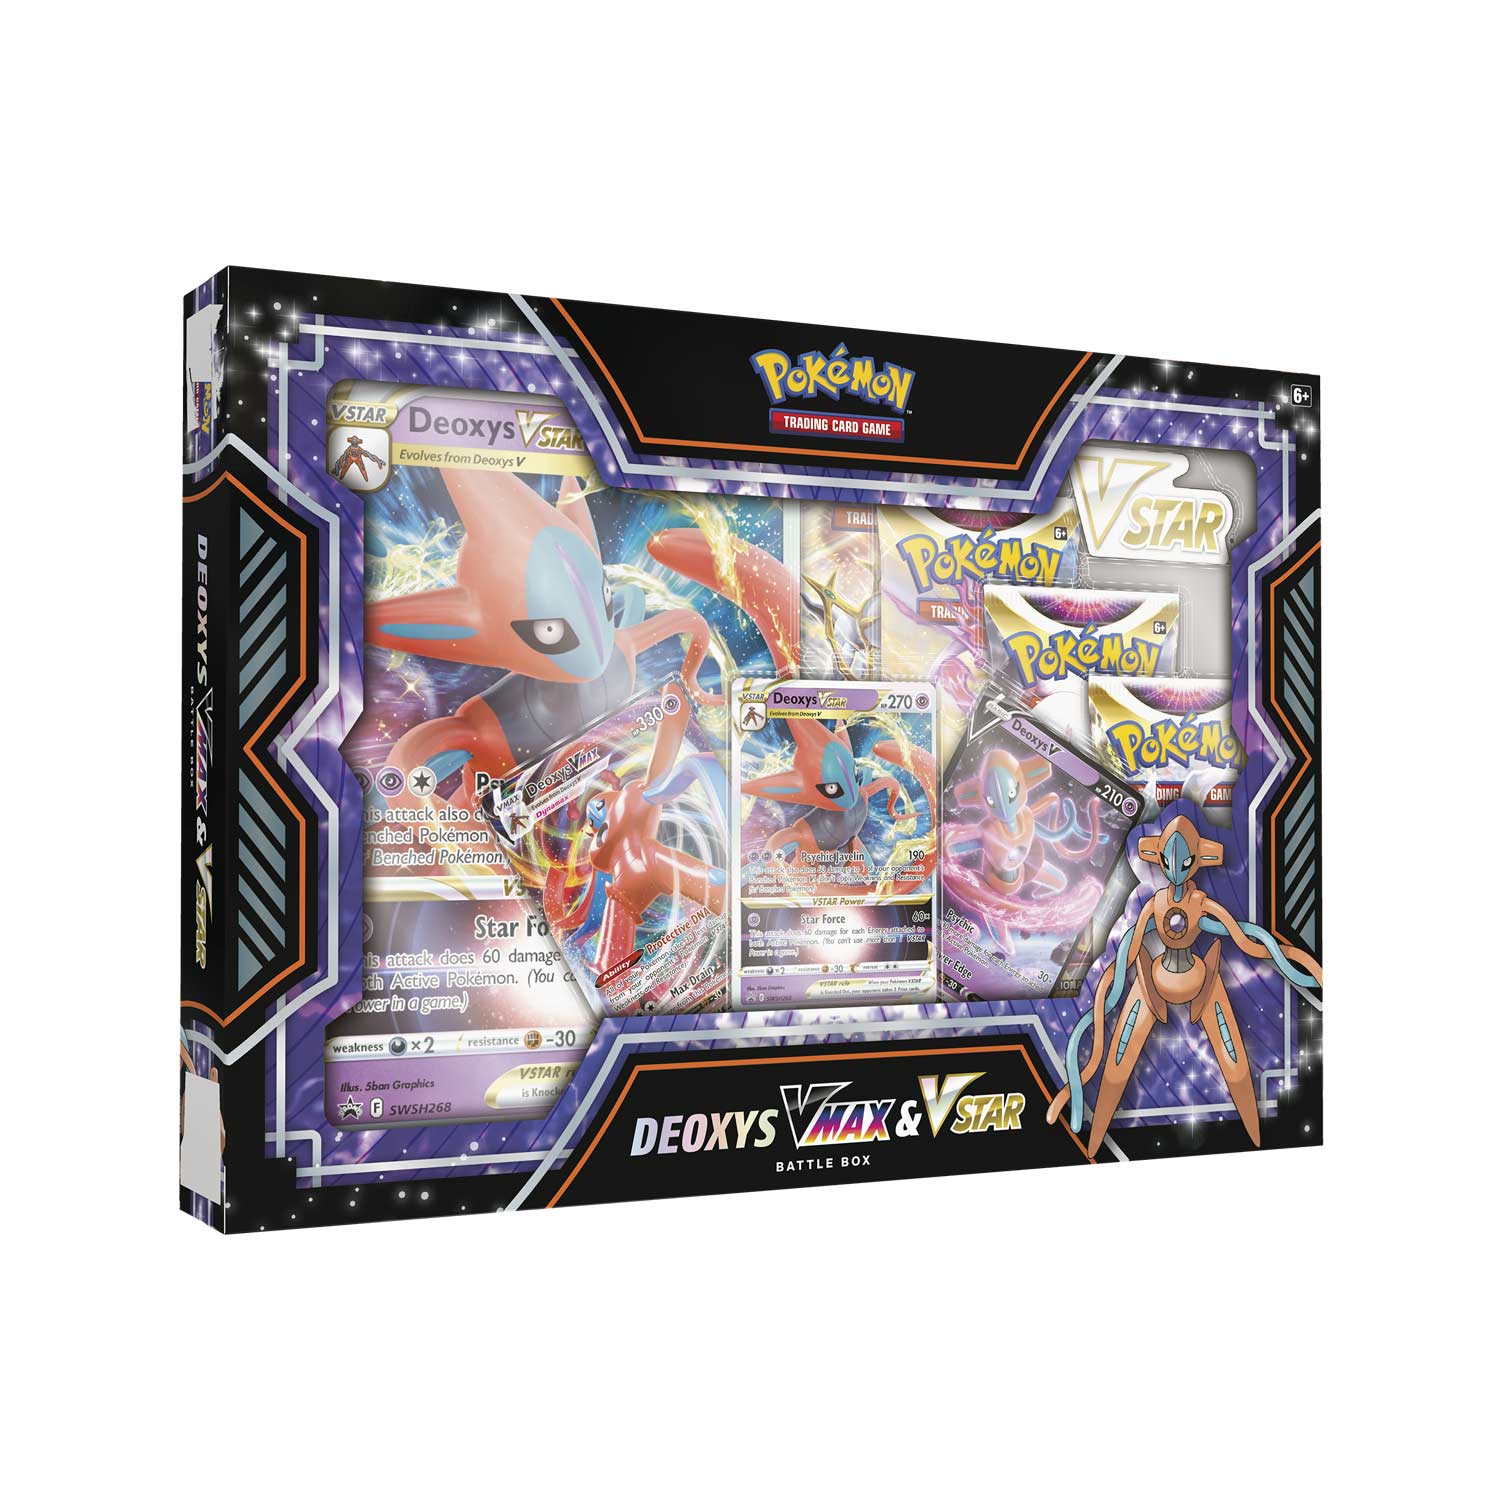 Pokemon TCG: Deoxys VMAX & VSTAR Battle Box